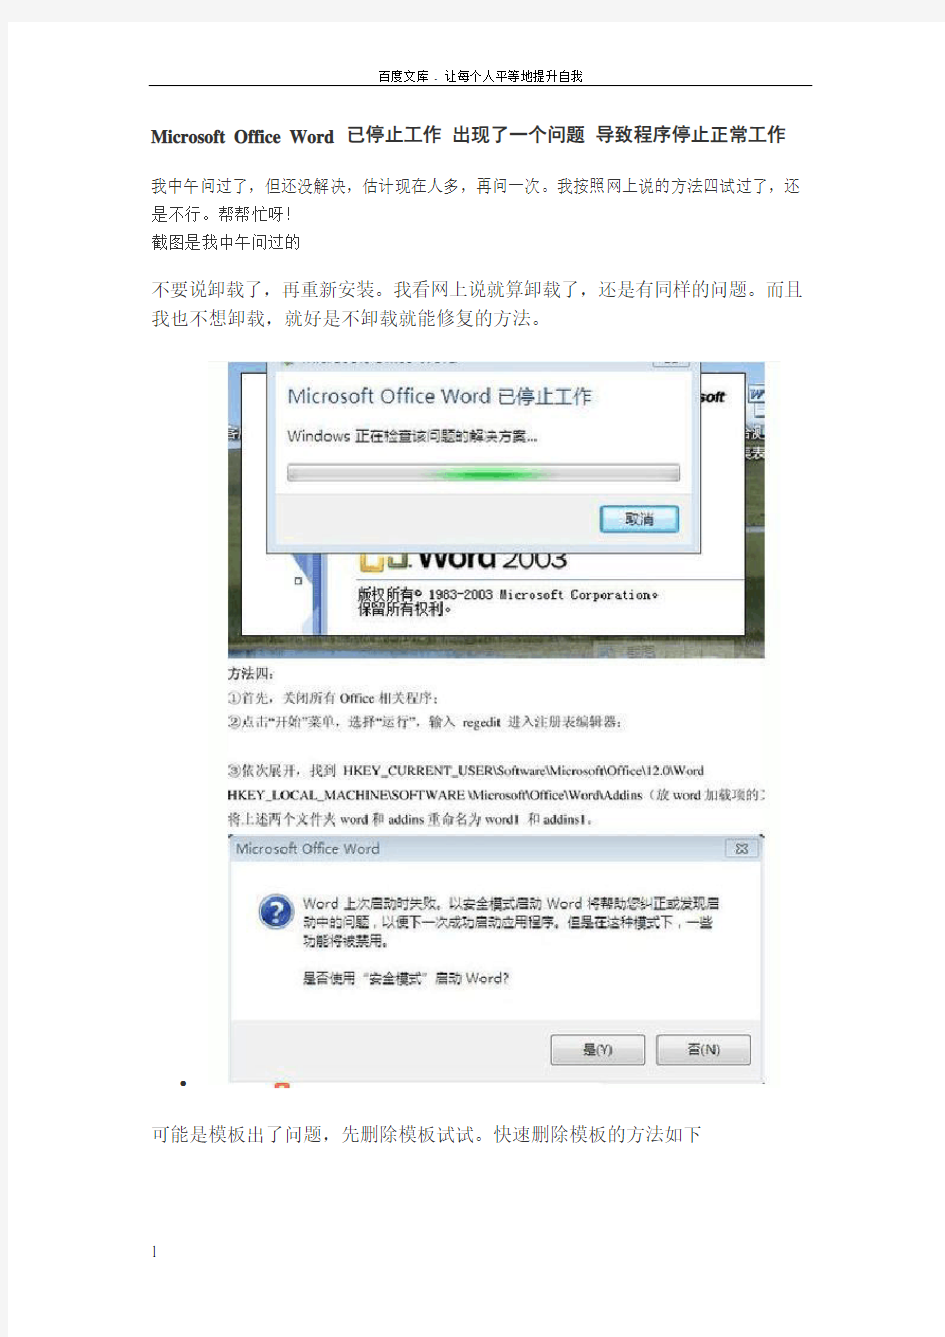 MicrosoftOfficeWord已停止工作出现了一个问题导致程序停止正常工作